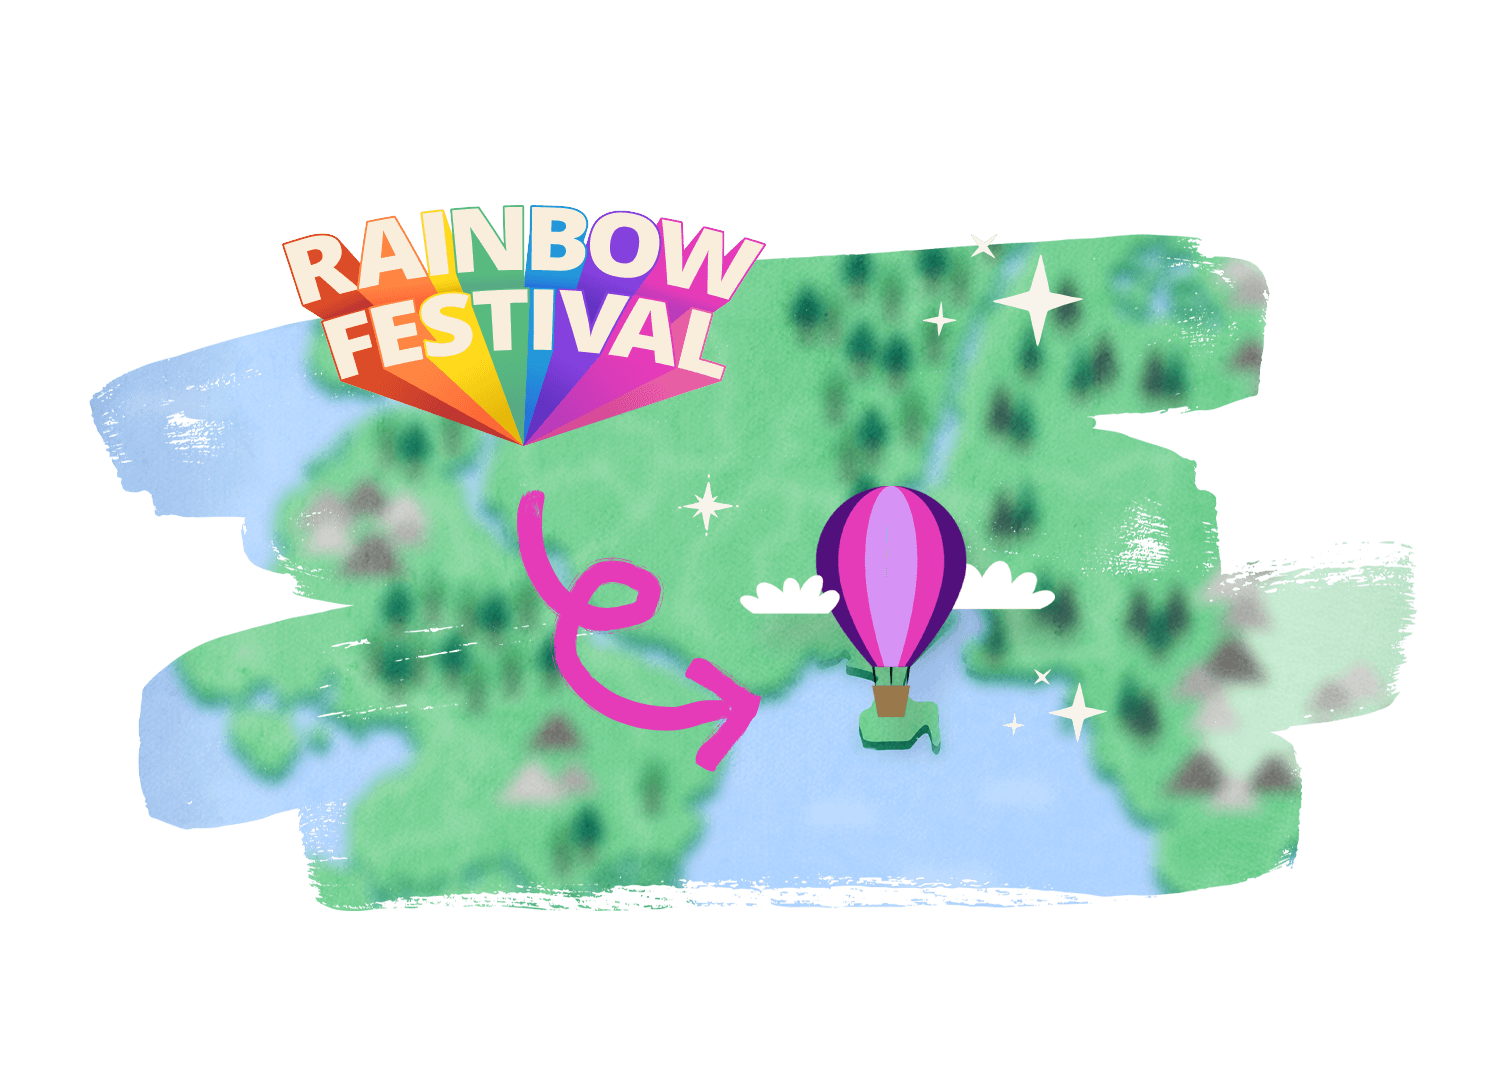 Rainbow map